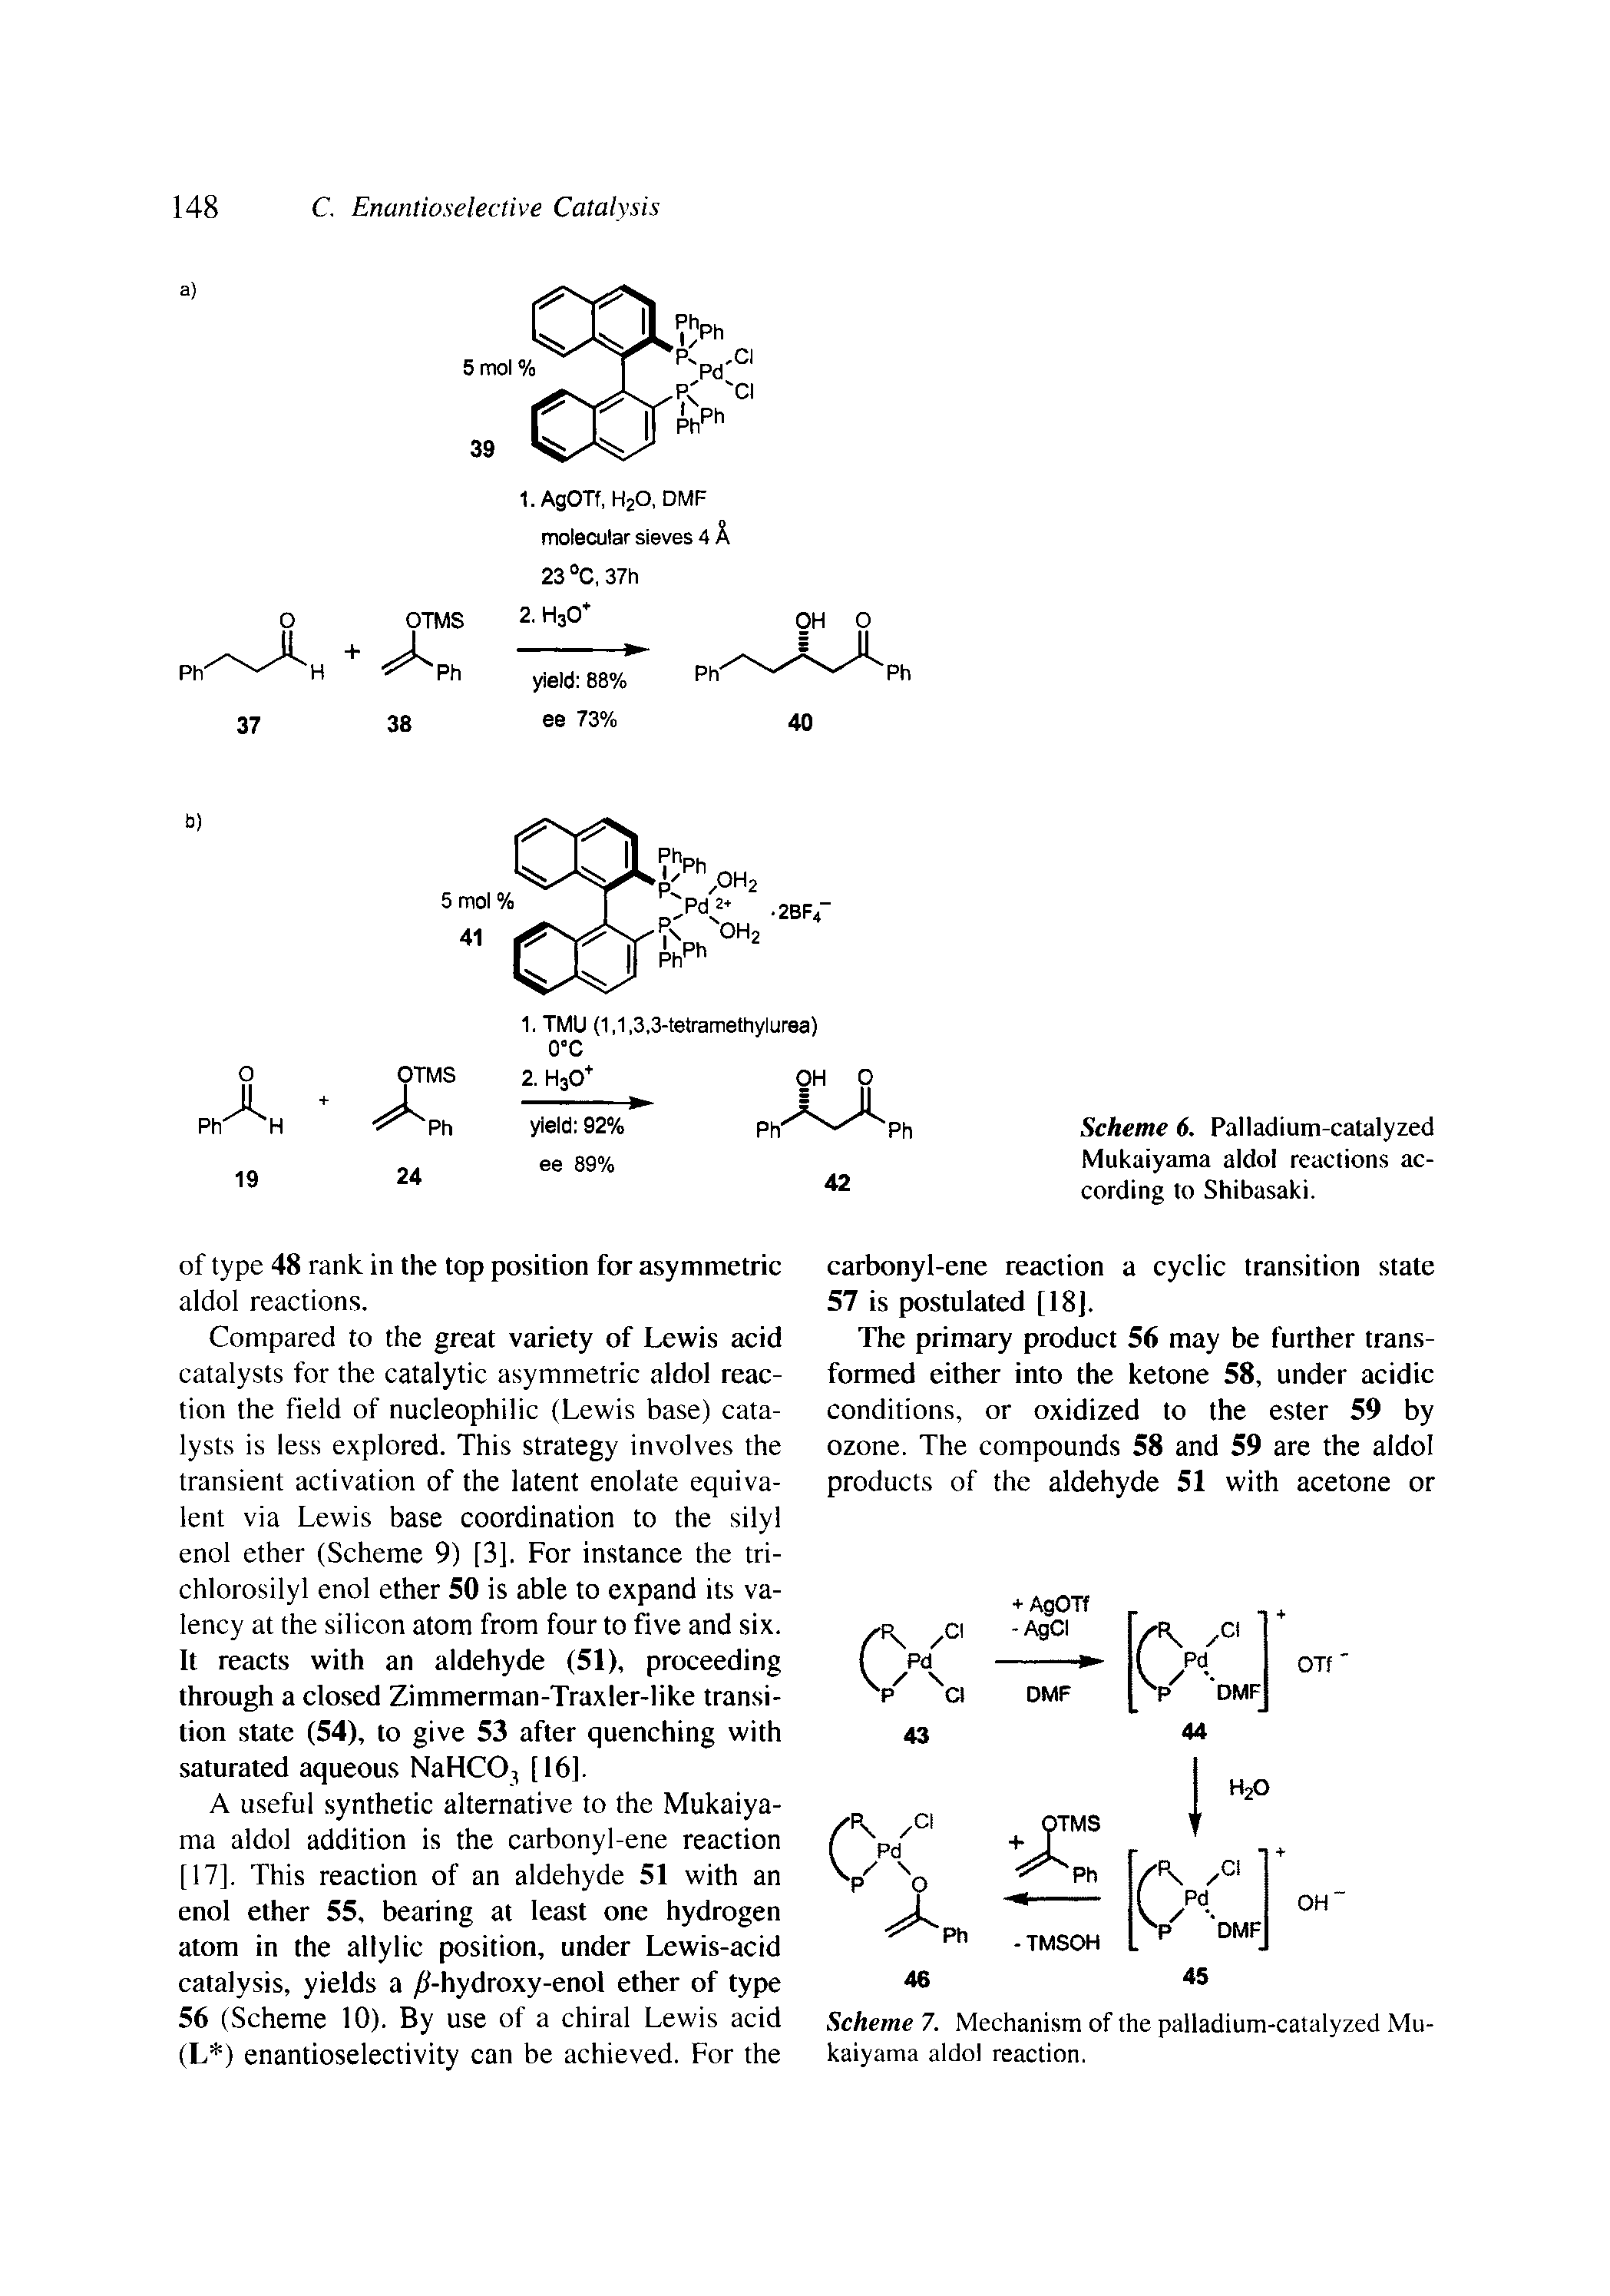 Scheme 6. Palladium-catalyzed Mukaiyama aldol reactions according to Shibasaki.